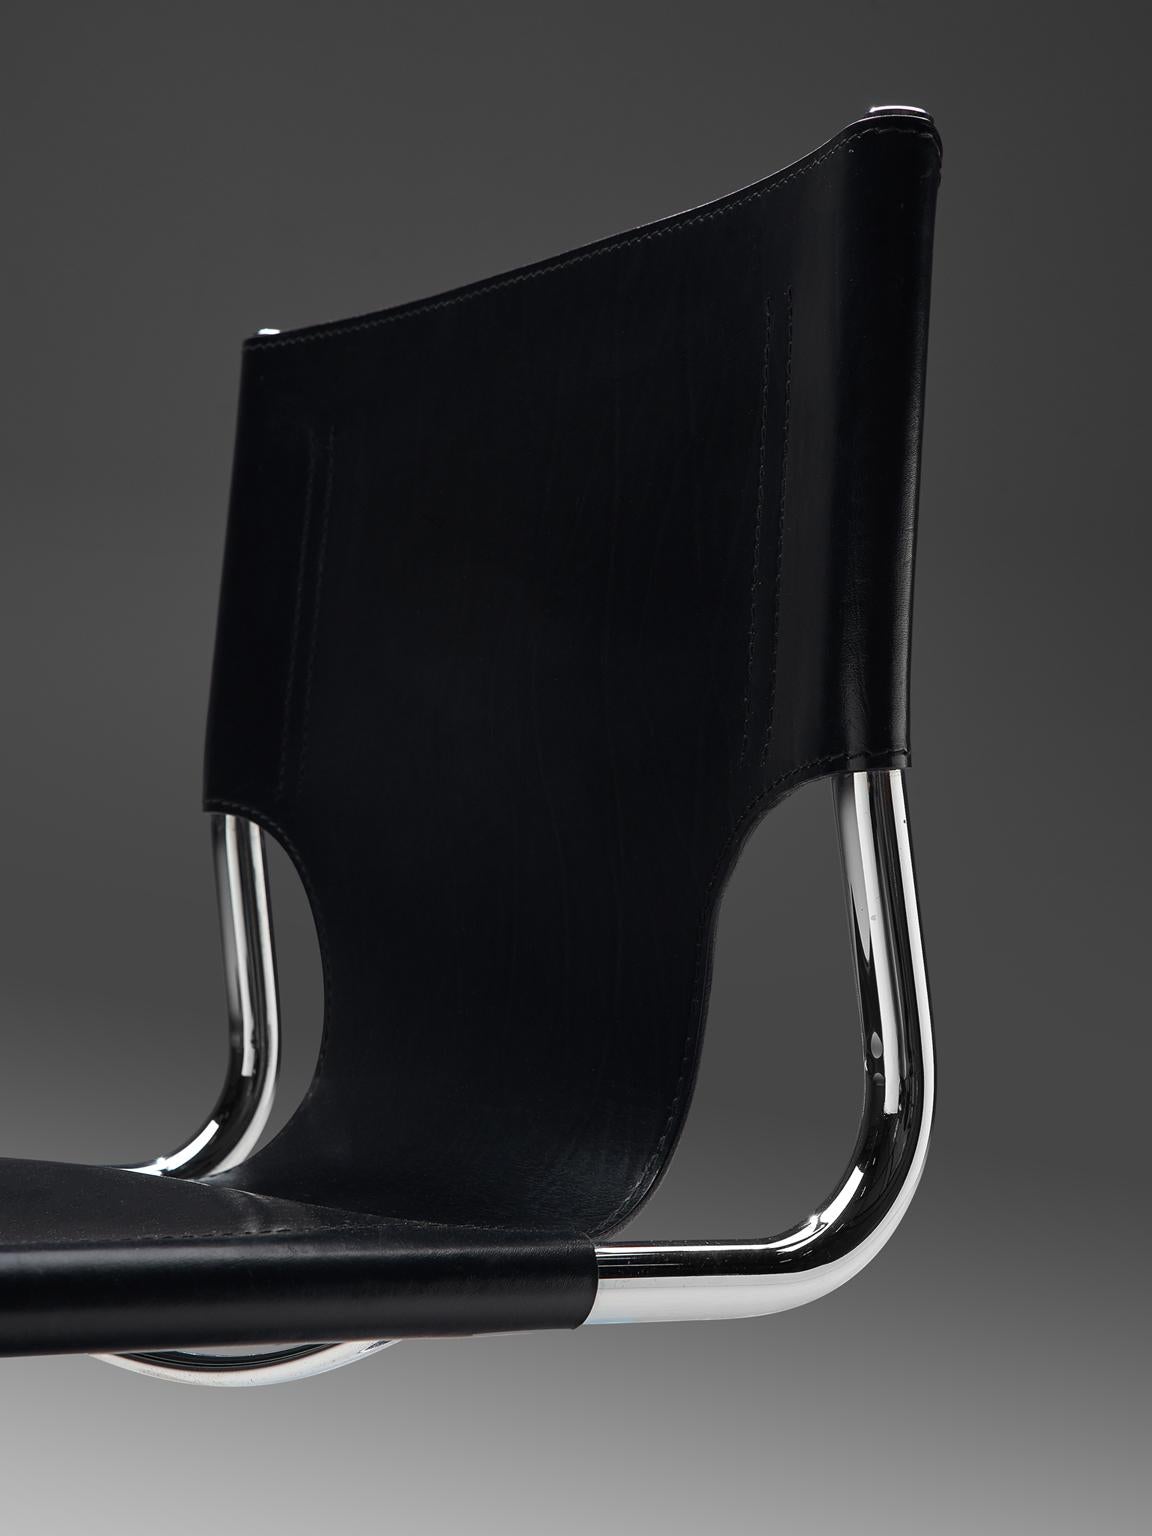 Claudio Bartoli Set of Dining Chairs 1